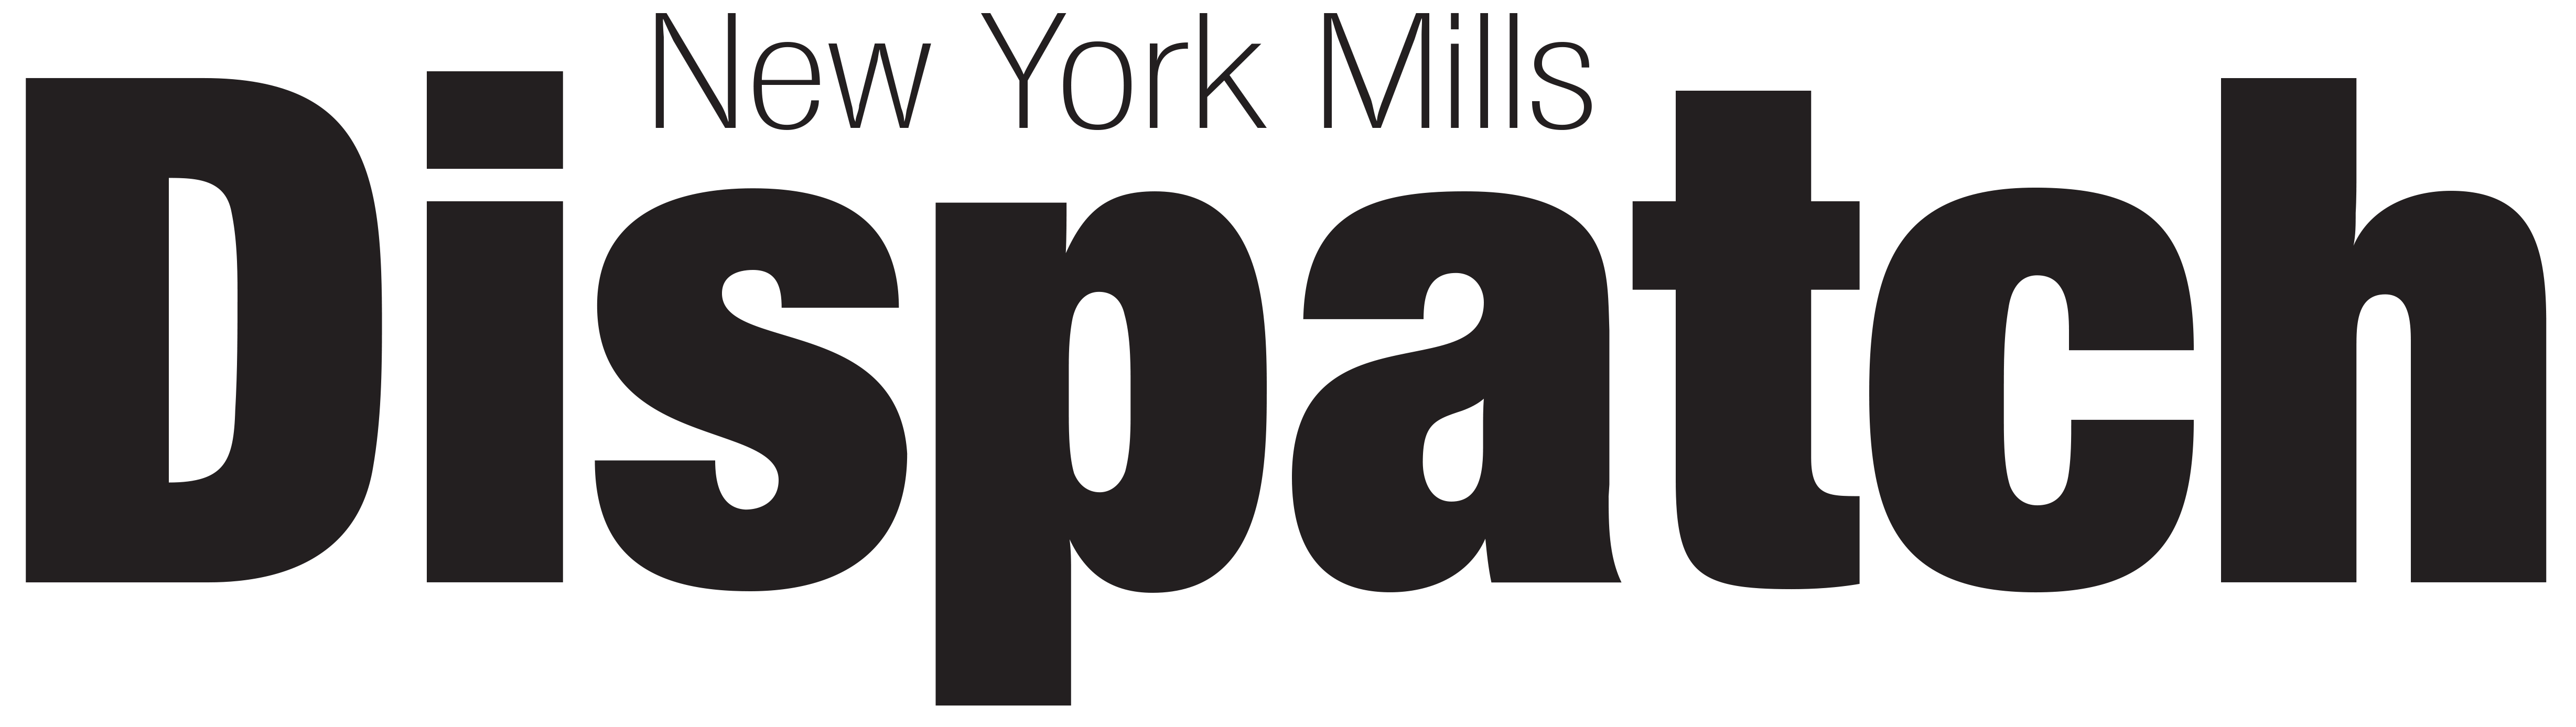 New York Mills Dispatch